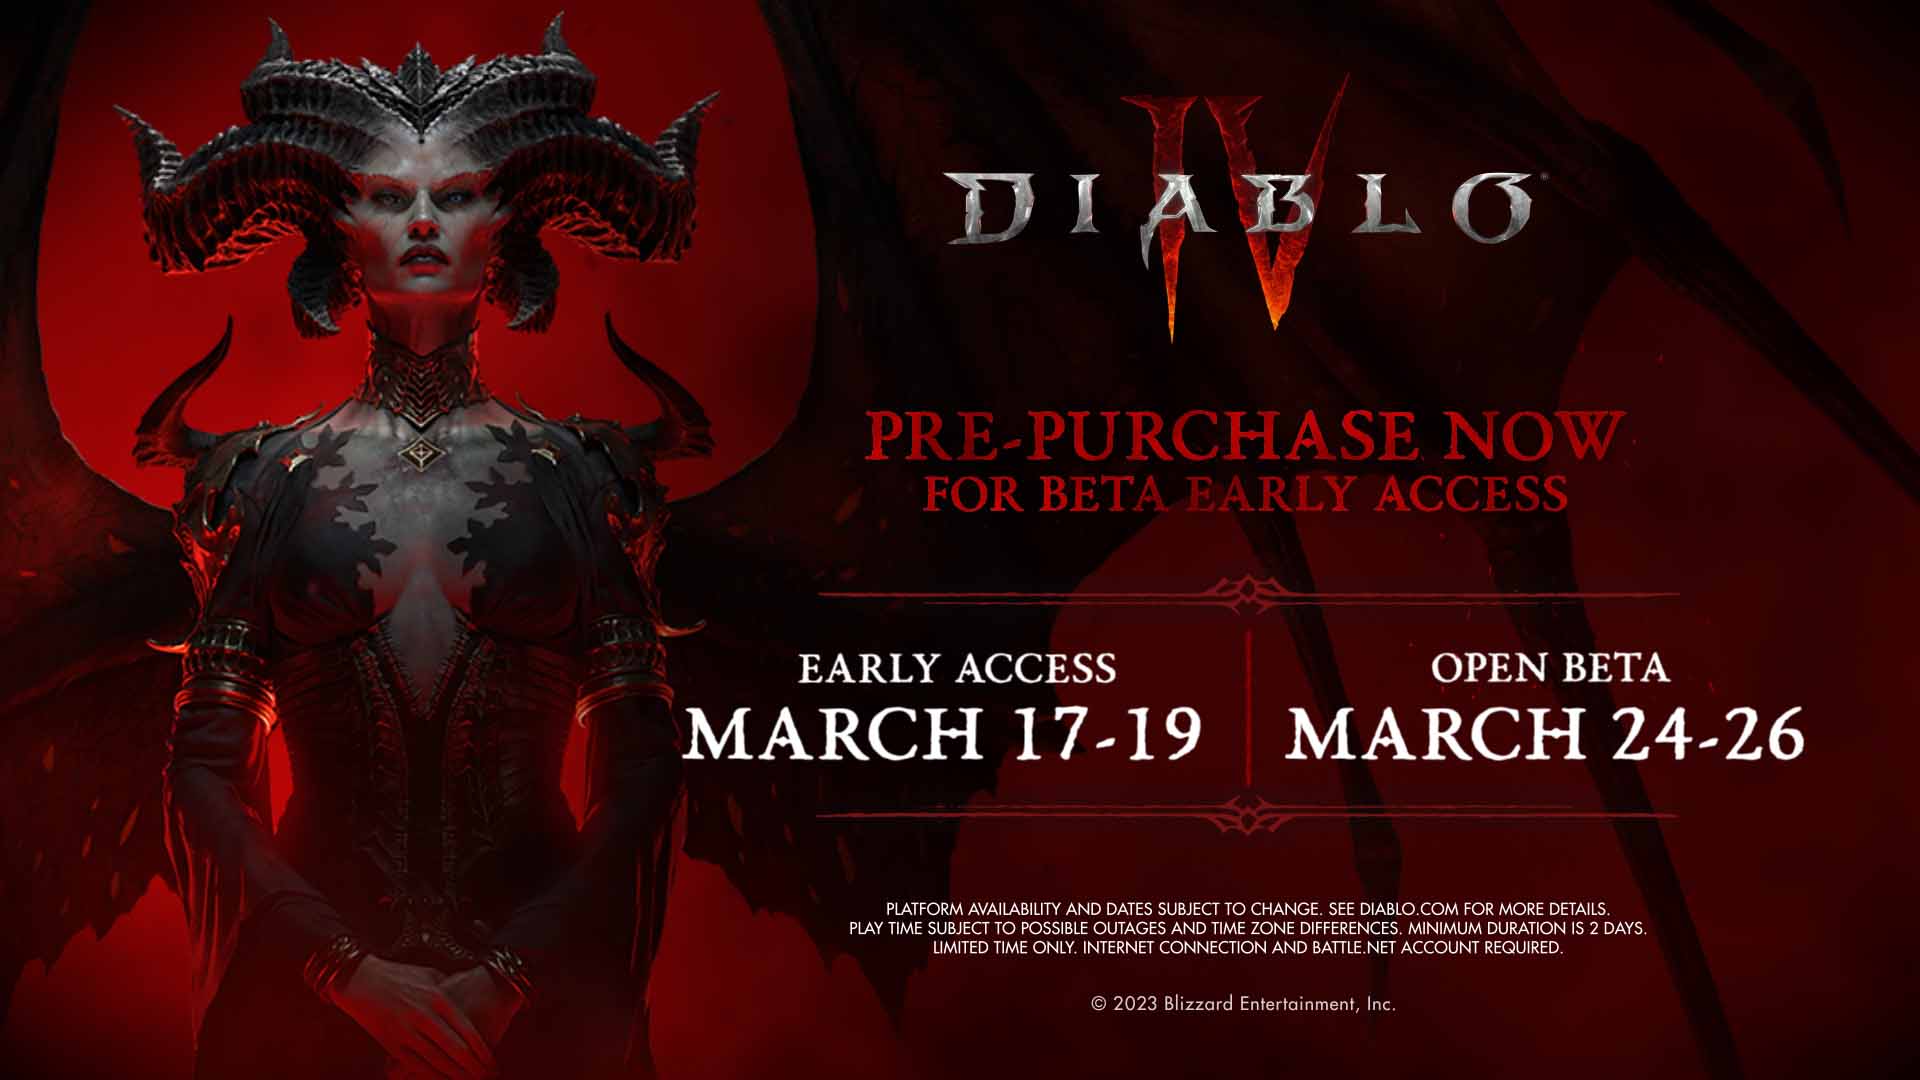 Diablo 4 beta details